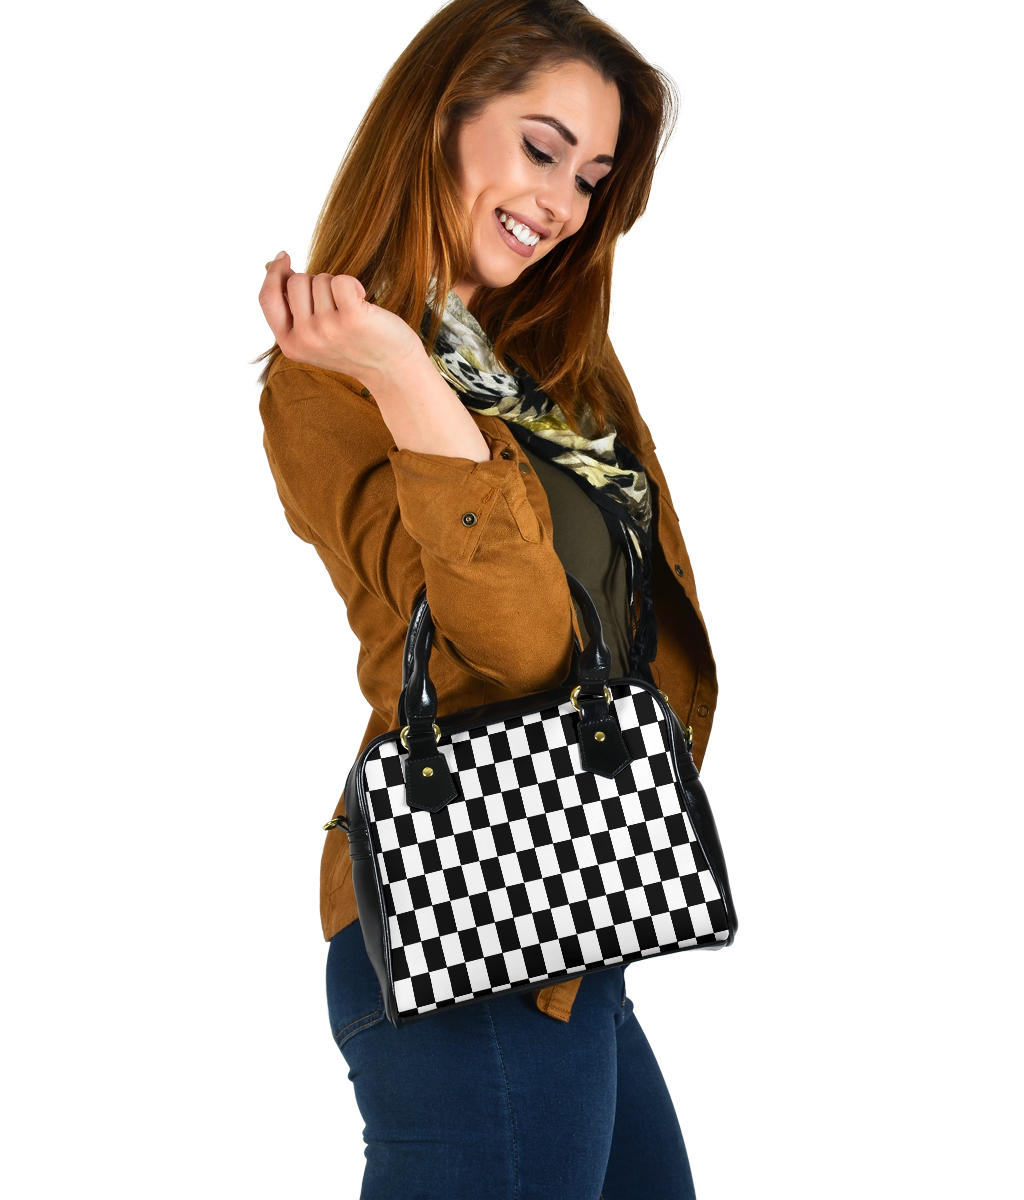 Racing Checkered Shoulder Handbag!